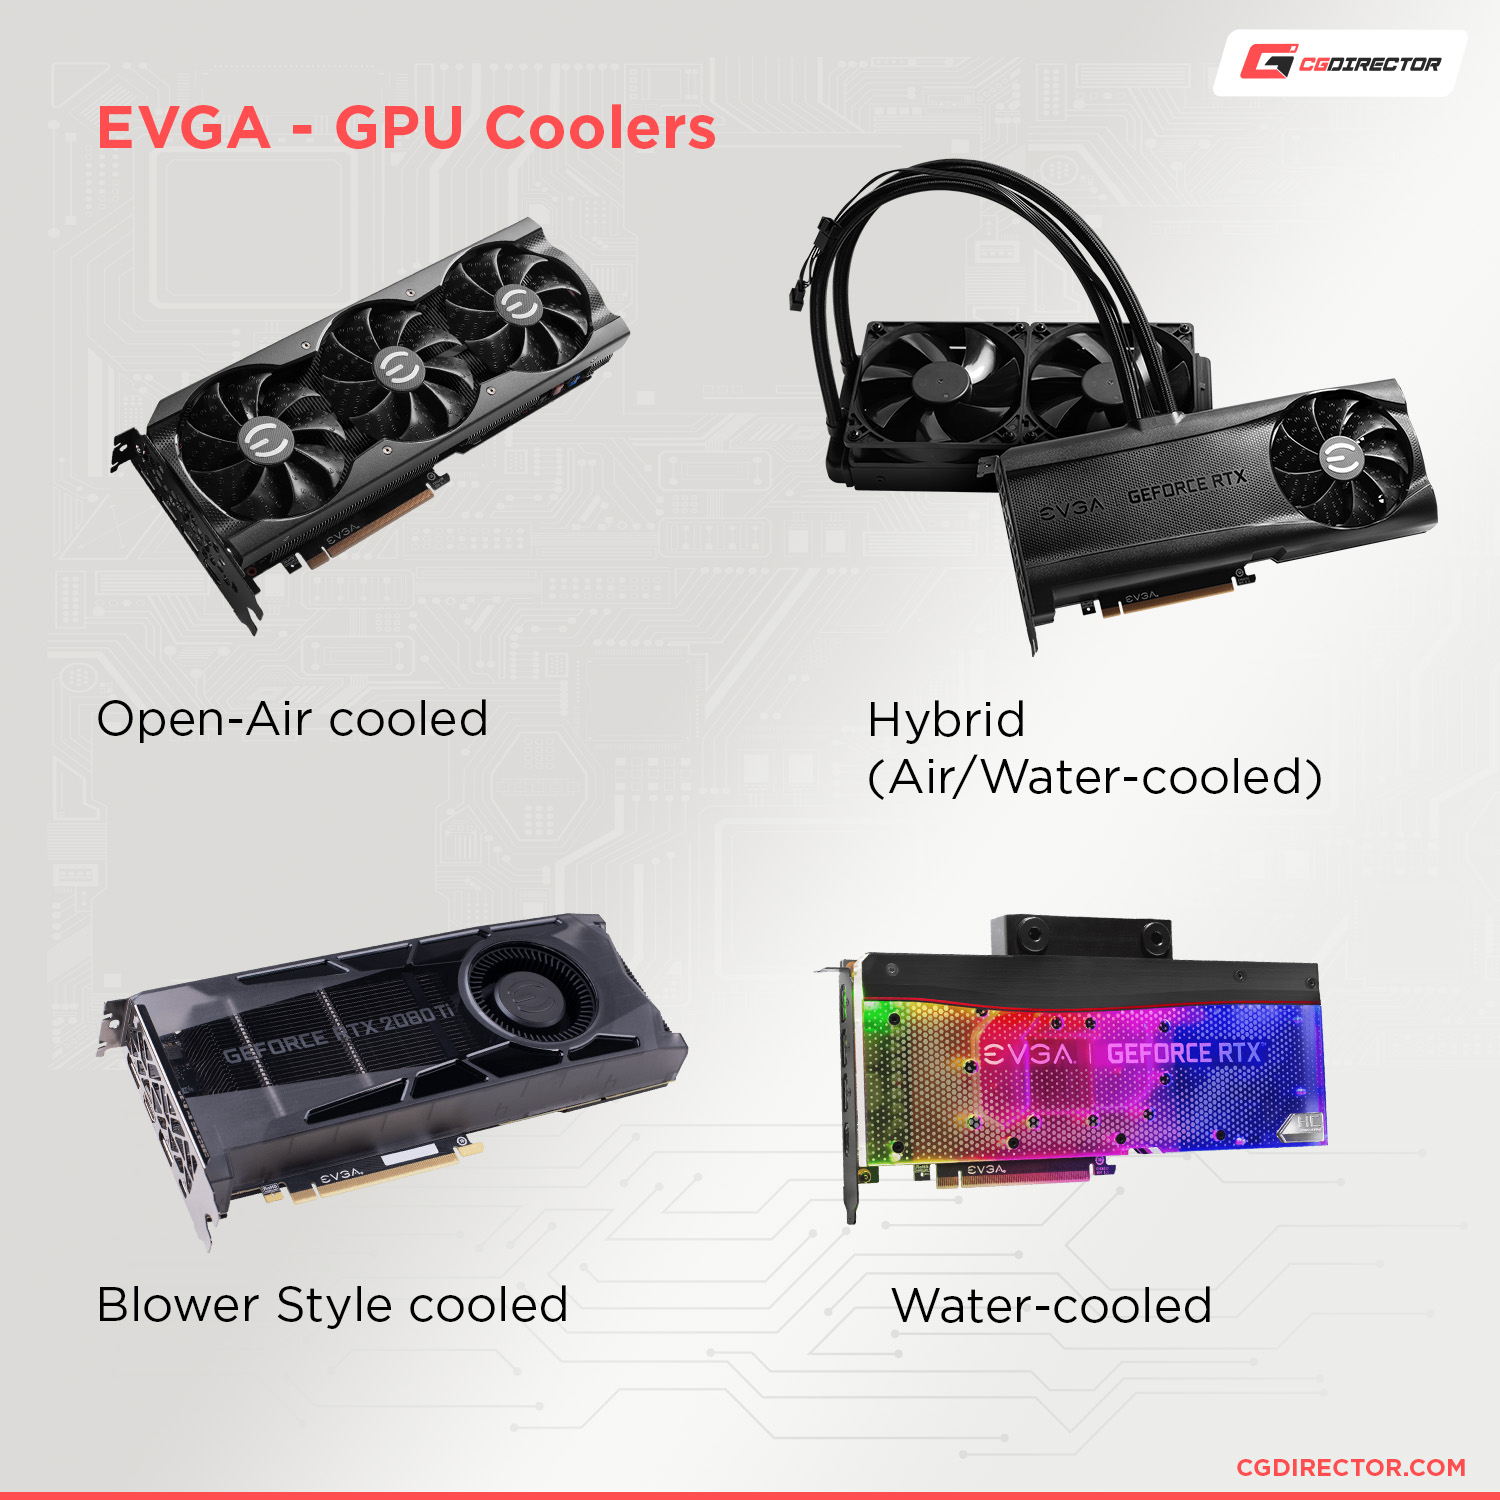 EVGA - GPU Coolers